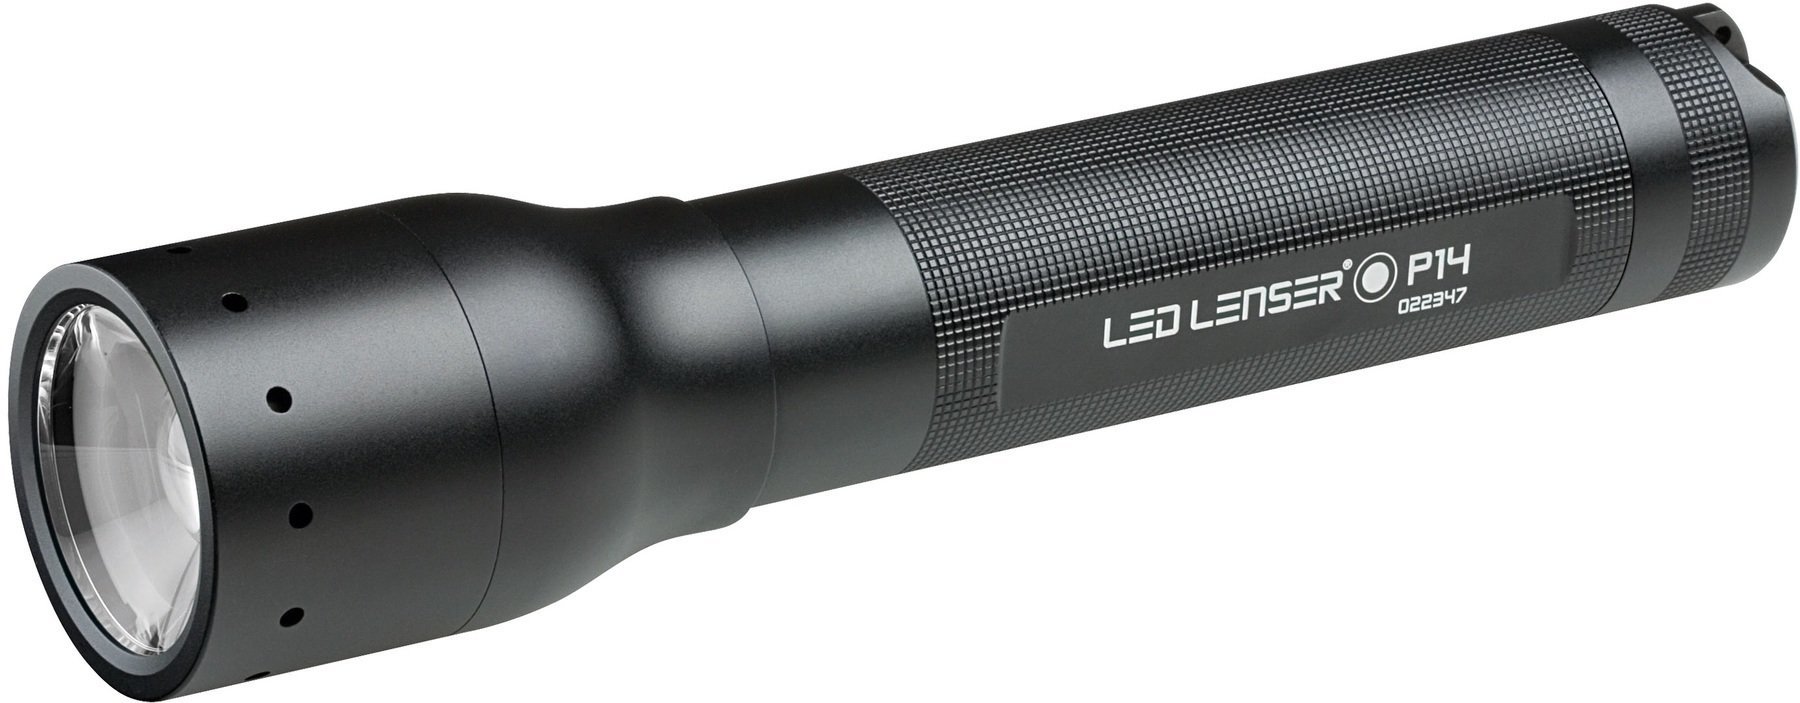 Flashlight Led Lenser P14 Flashlight